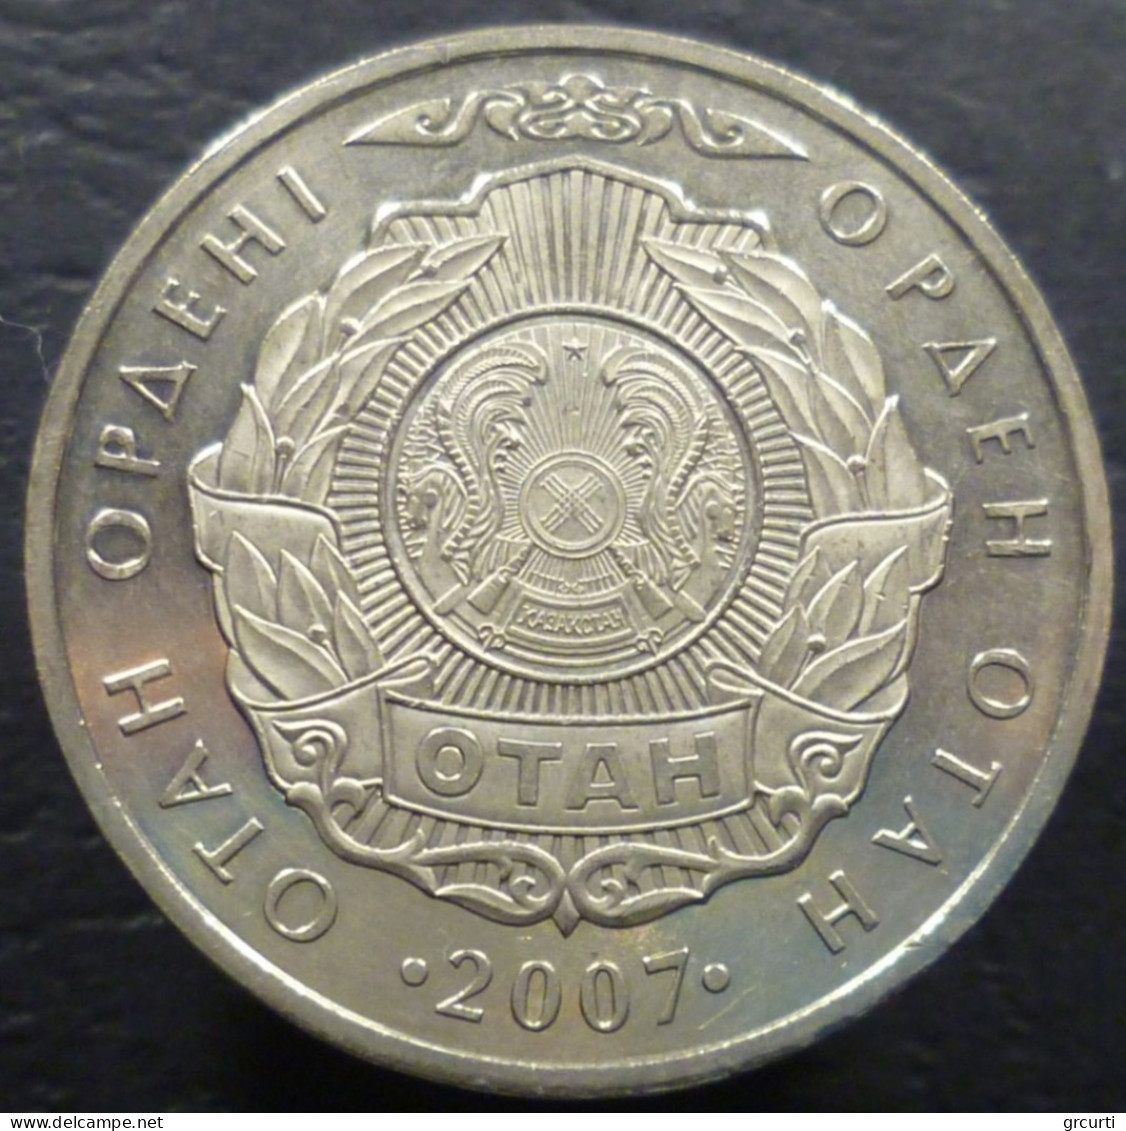 Kazakistan - 50 Tenge 2007 - Serie D'onorificenze - Ordine Della Patria (Отан ордені) - KM# 165 - Kazachstan